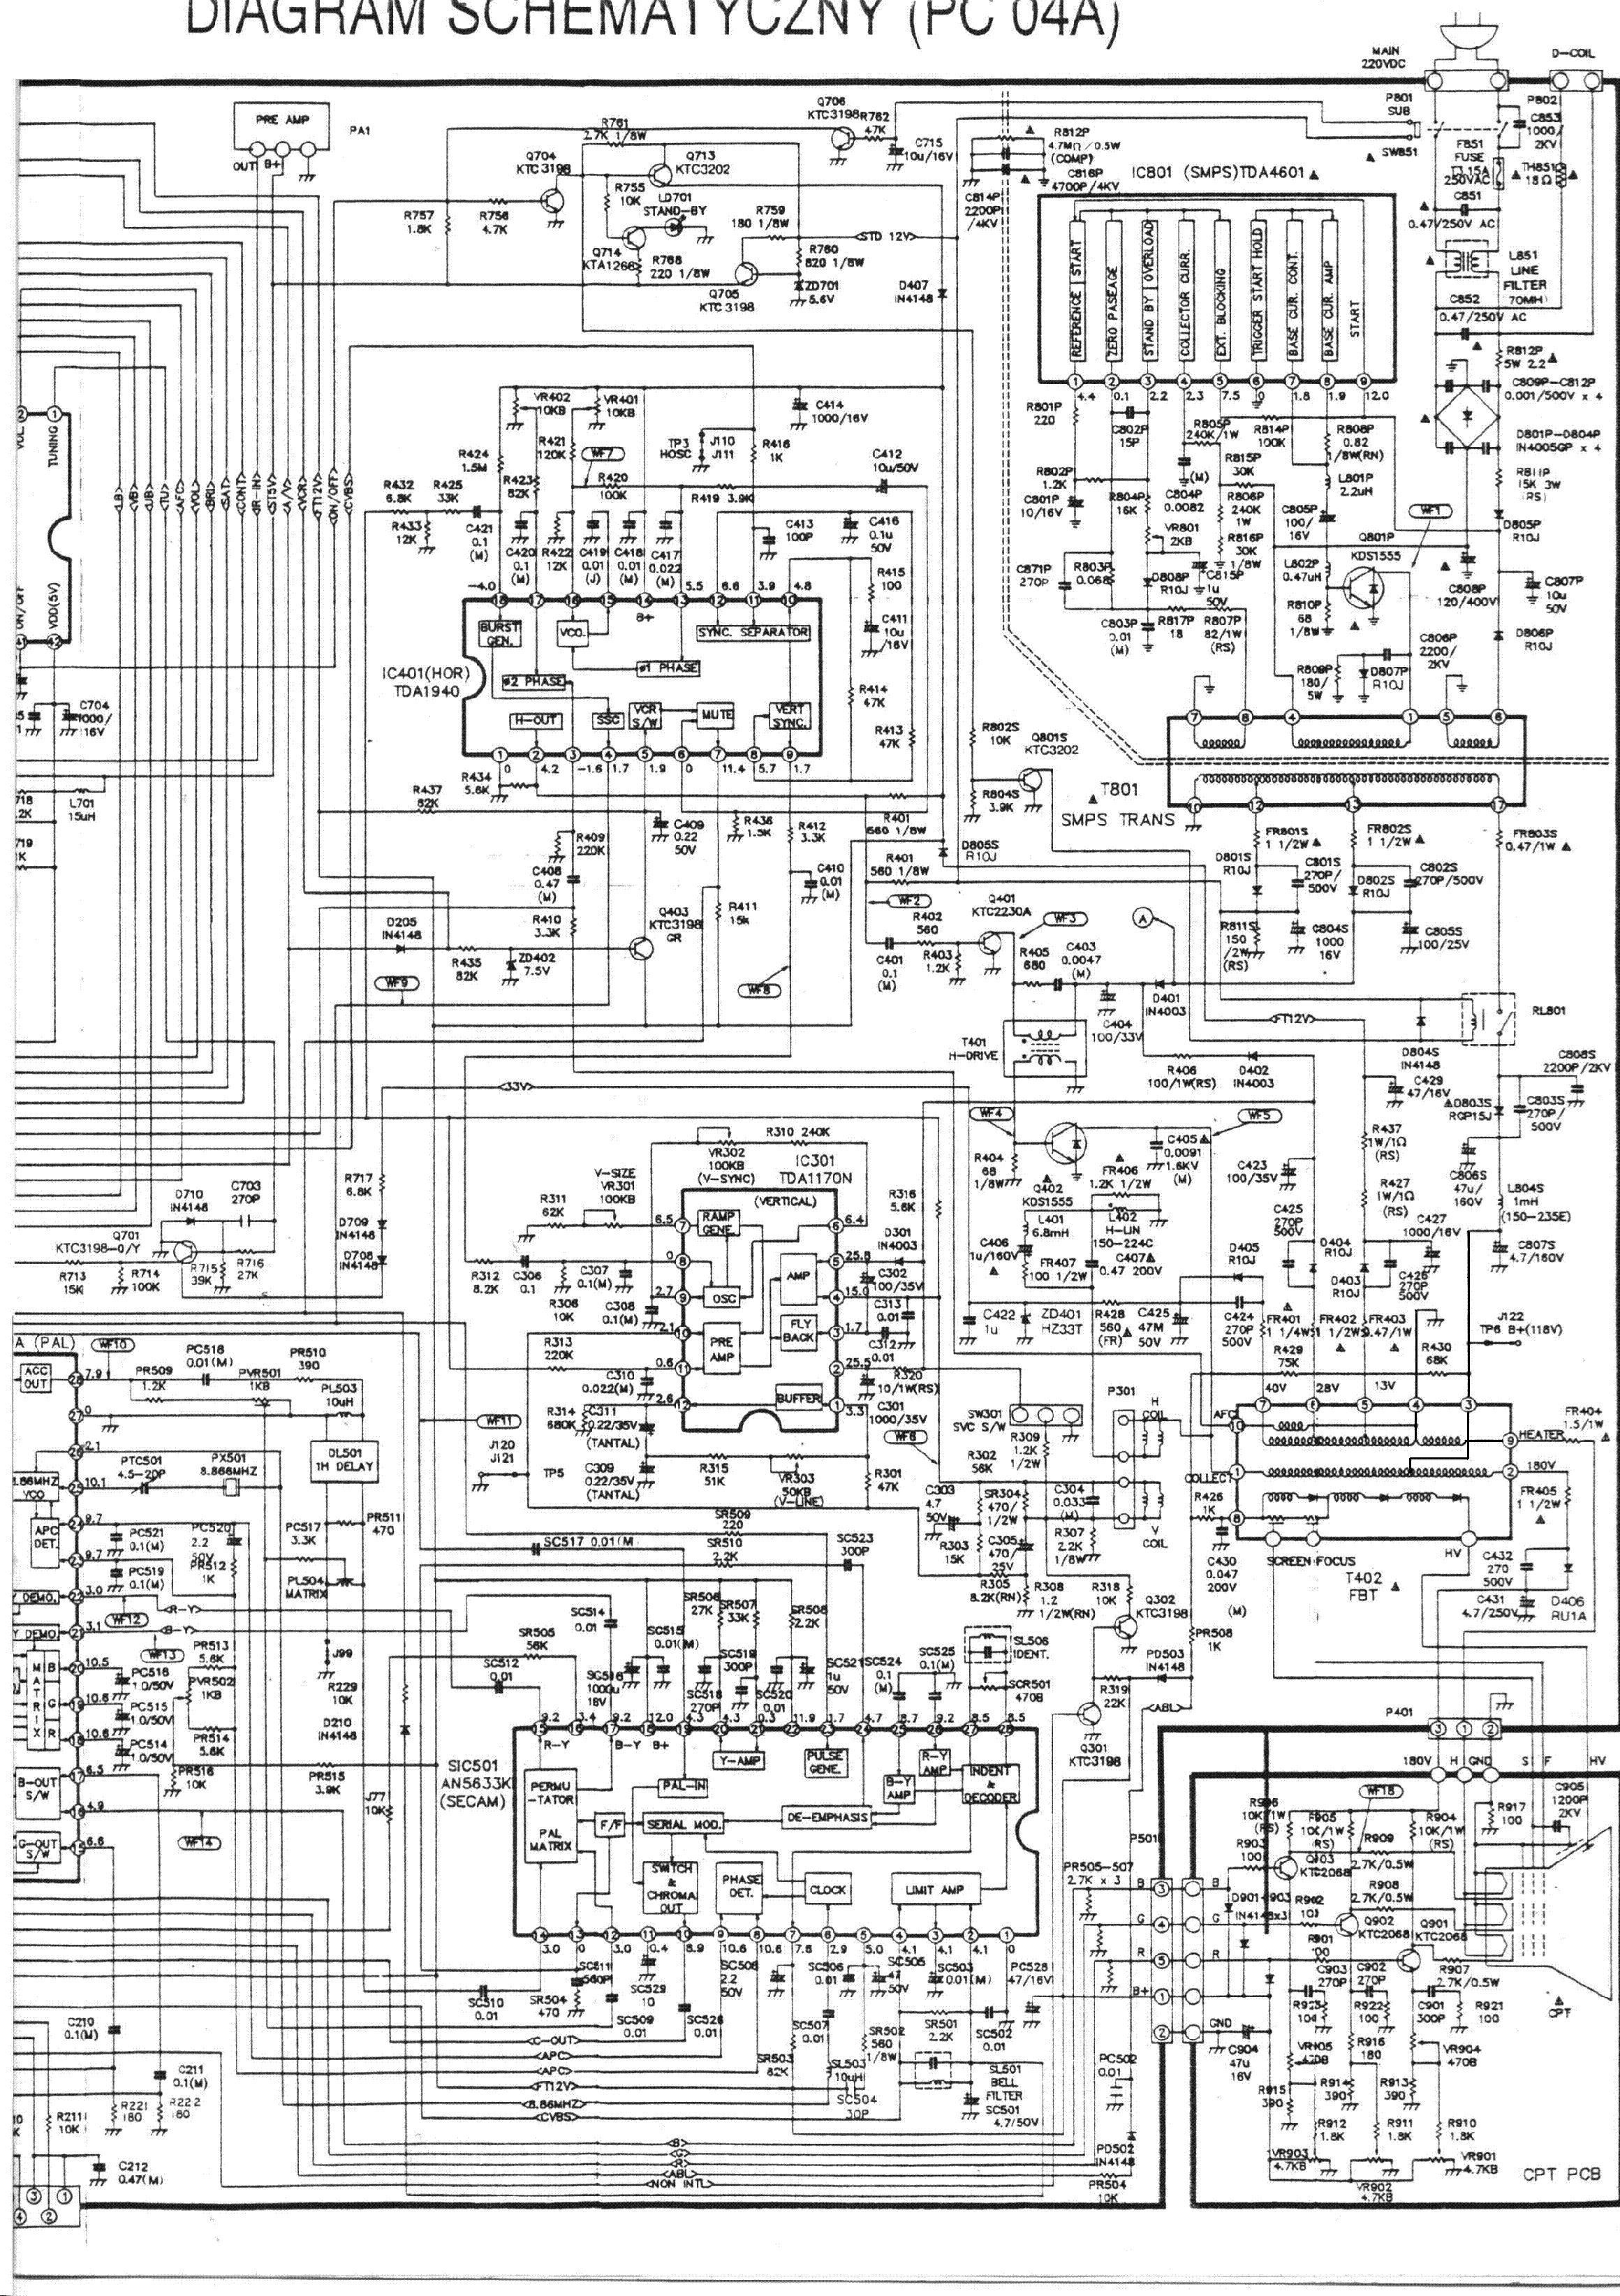 LG CH PC04A service manual (2nd page)